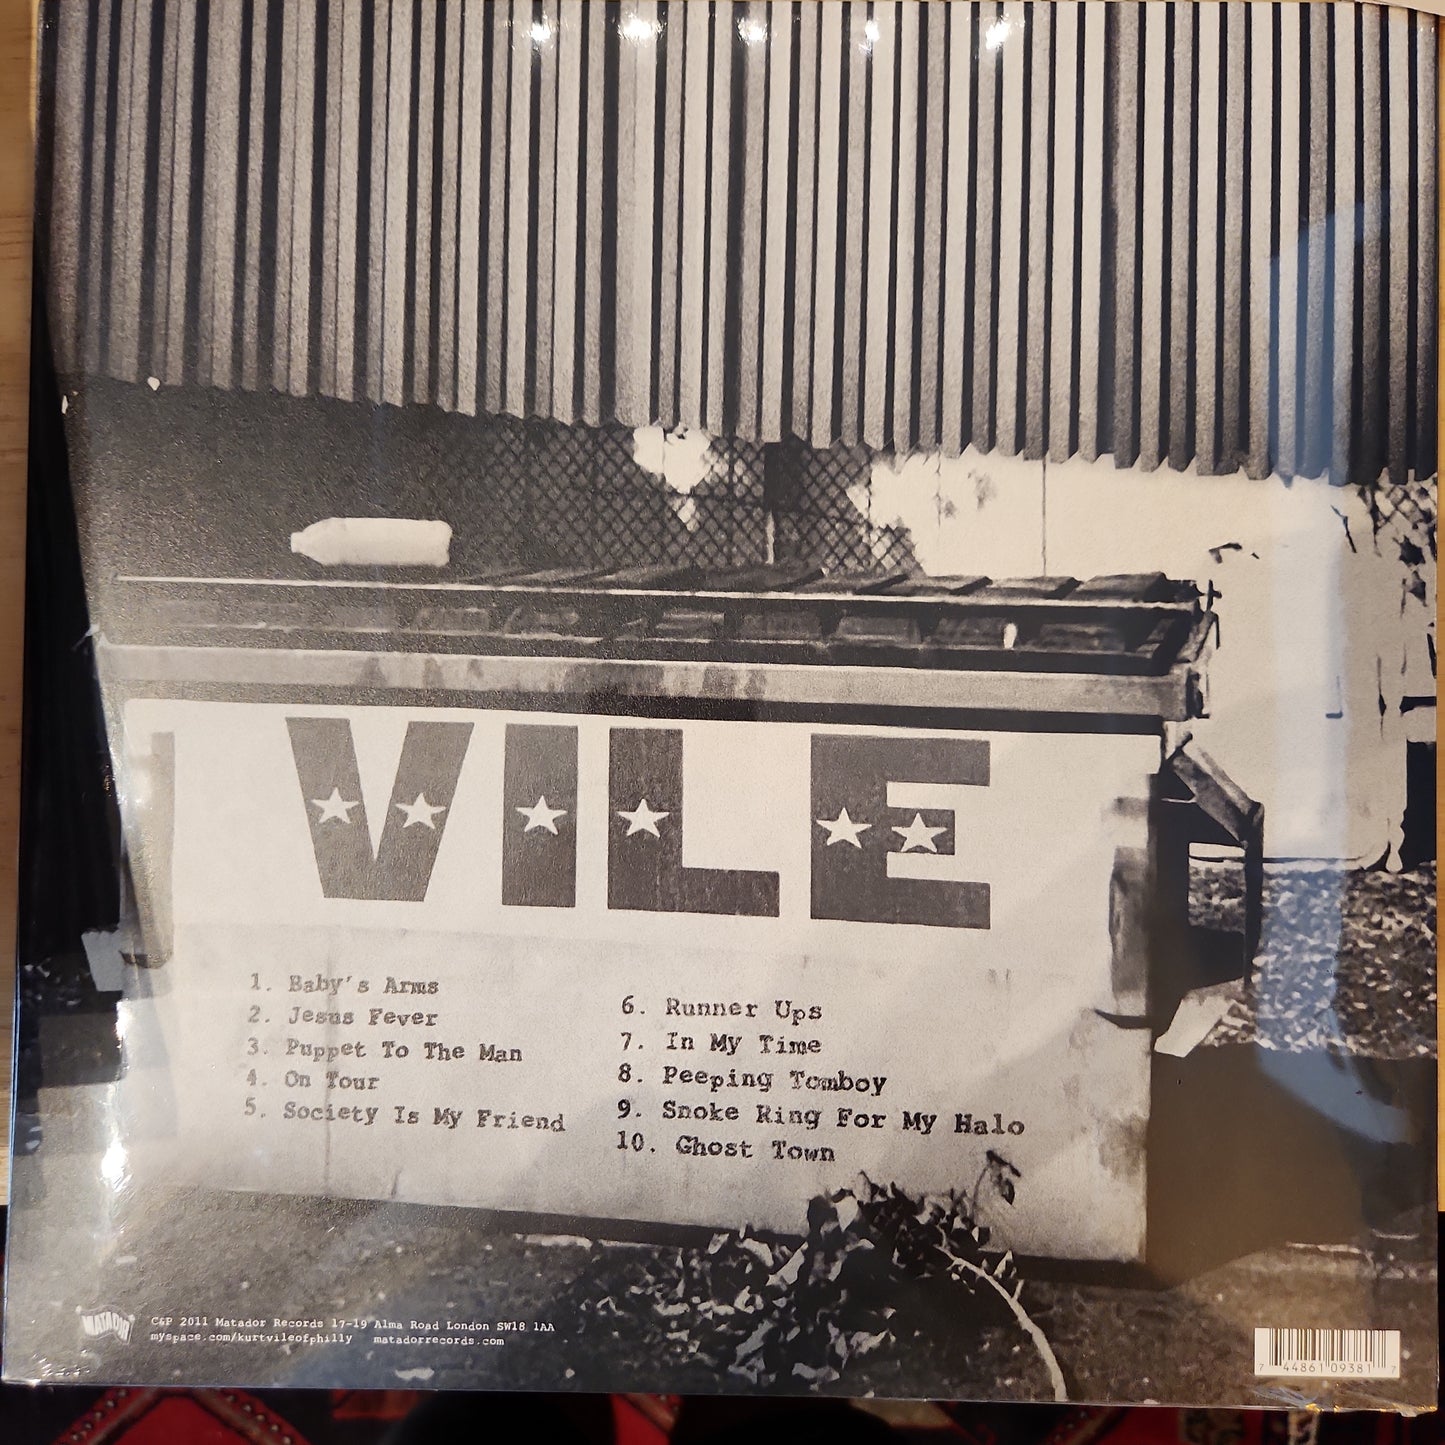 Kurt Vile - Smoke Ring for my Halo - Vinyl LP